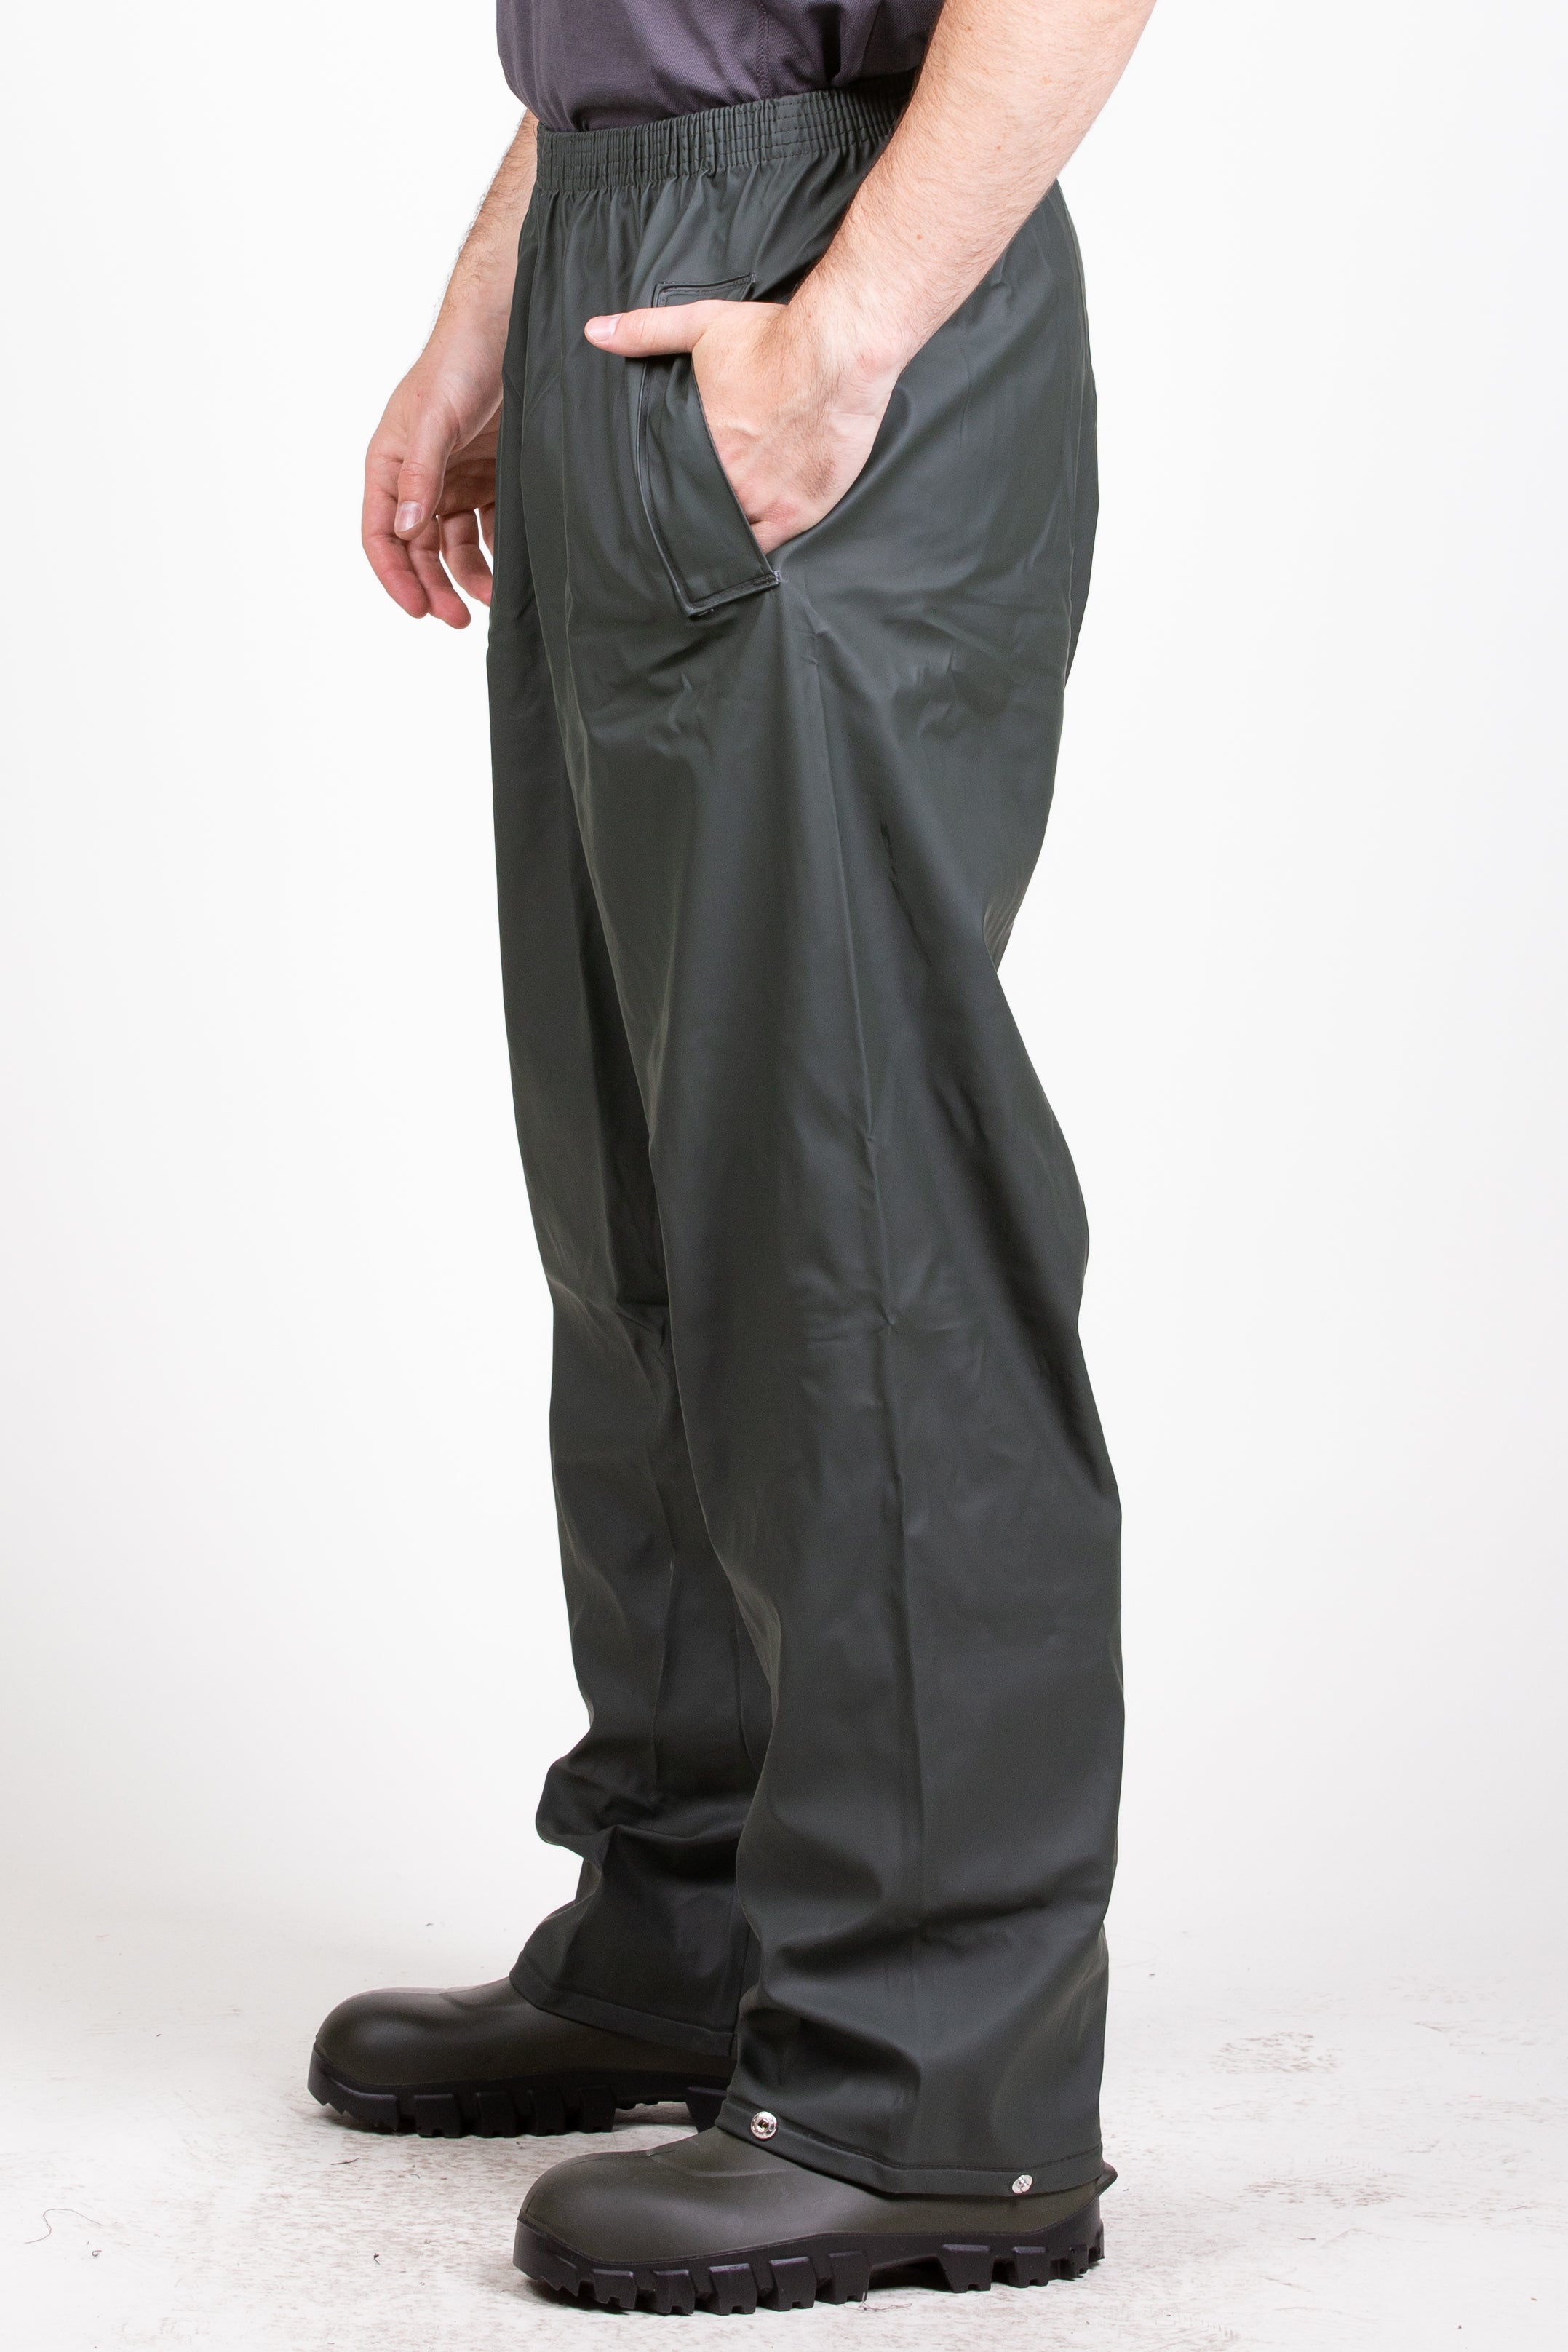 Fortex Flex Waterproof Trousers Olive | Ernest Doe Shop